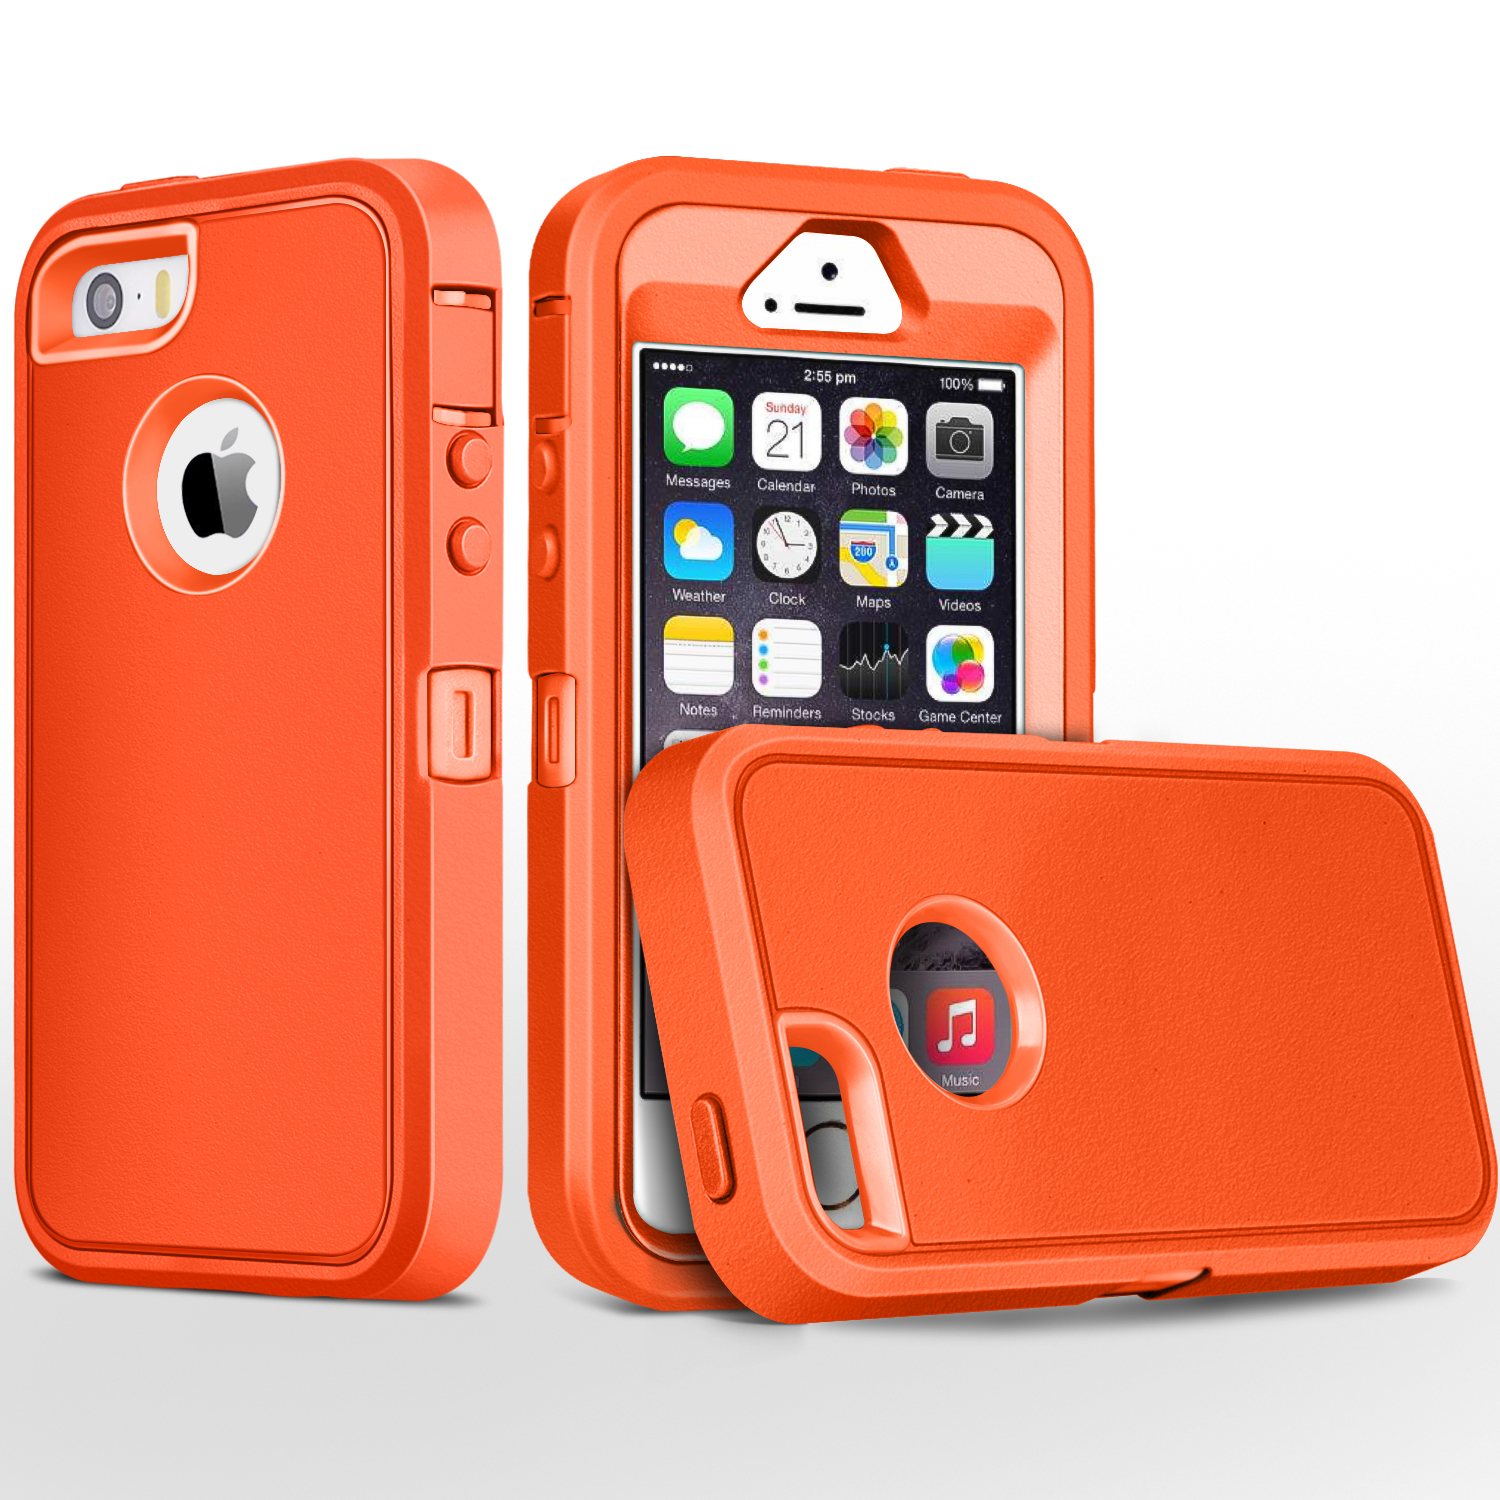 iPhone 5S Case,iPhone SE Case,Fogeek Heavy Duty PC and TPU Combo Protective Defender Body Armor Case for iPhone 5S,iPhone SE and iPhone 5 with Finger Print Function(Orange/Orange)